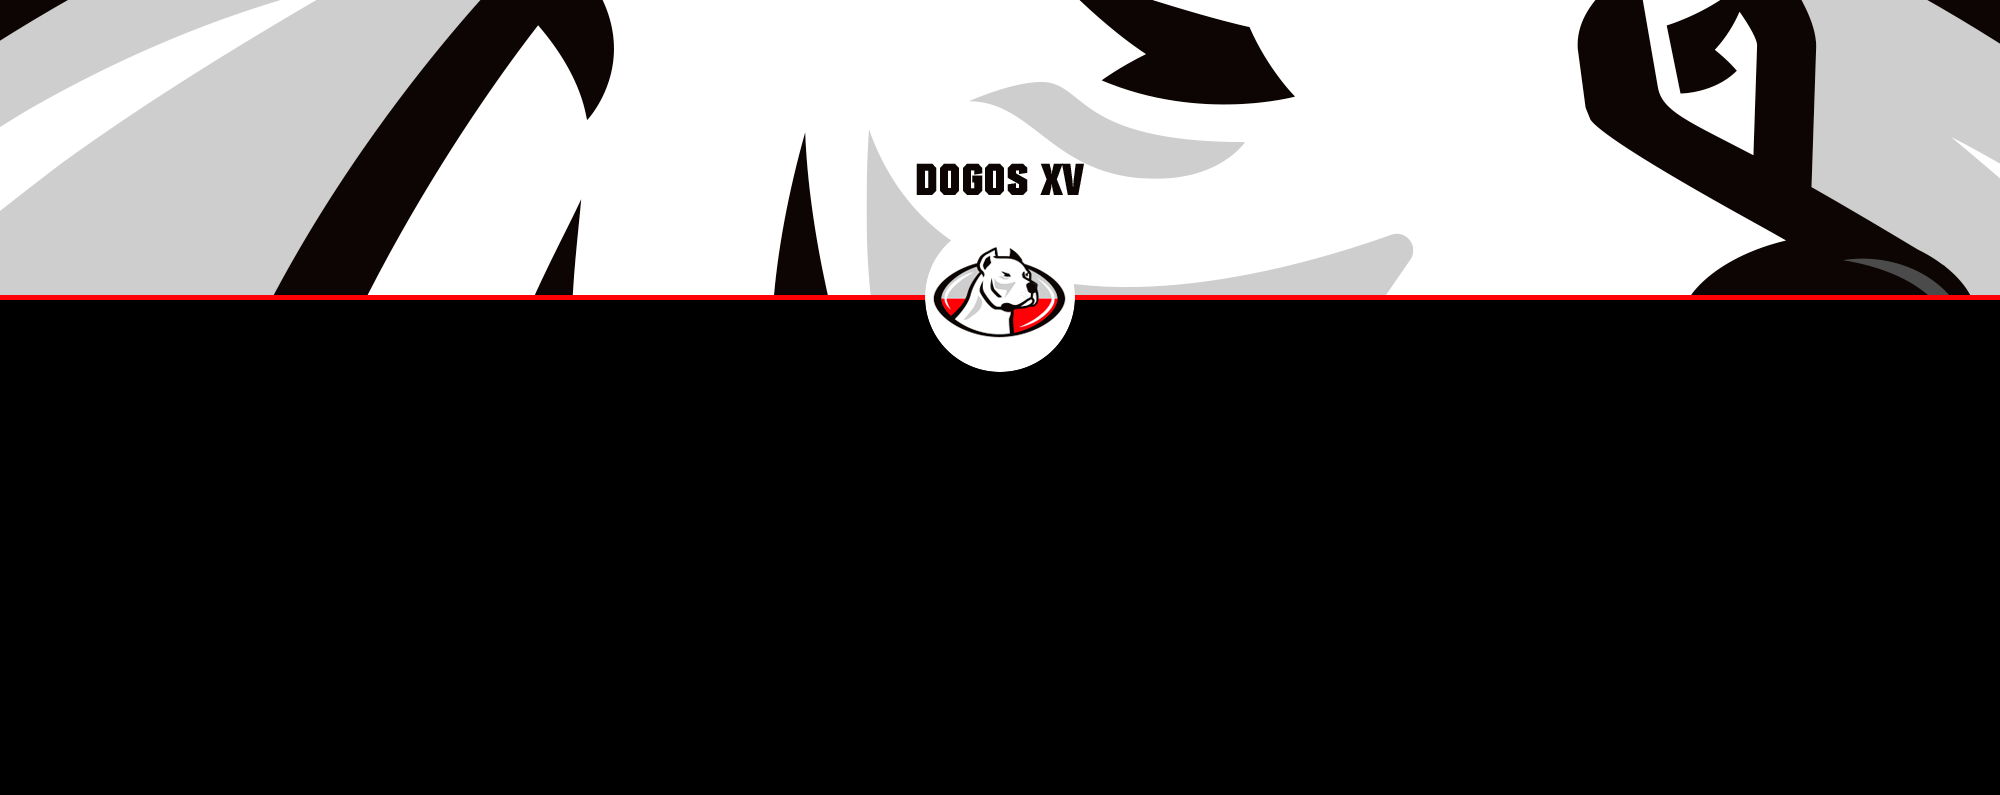 Dogos banner